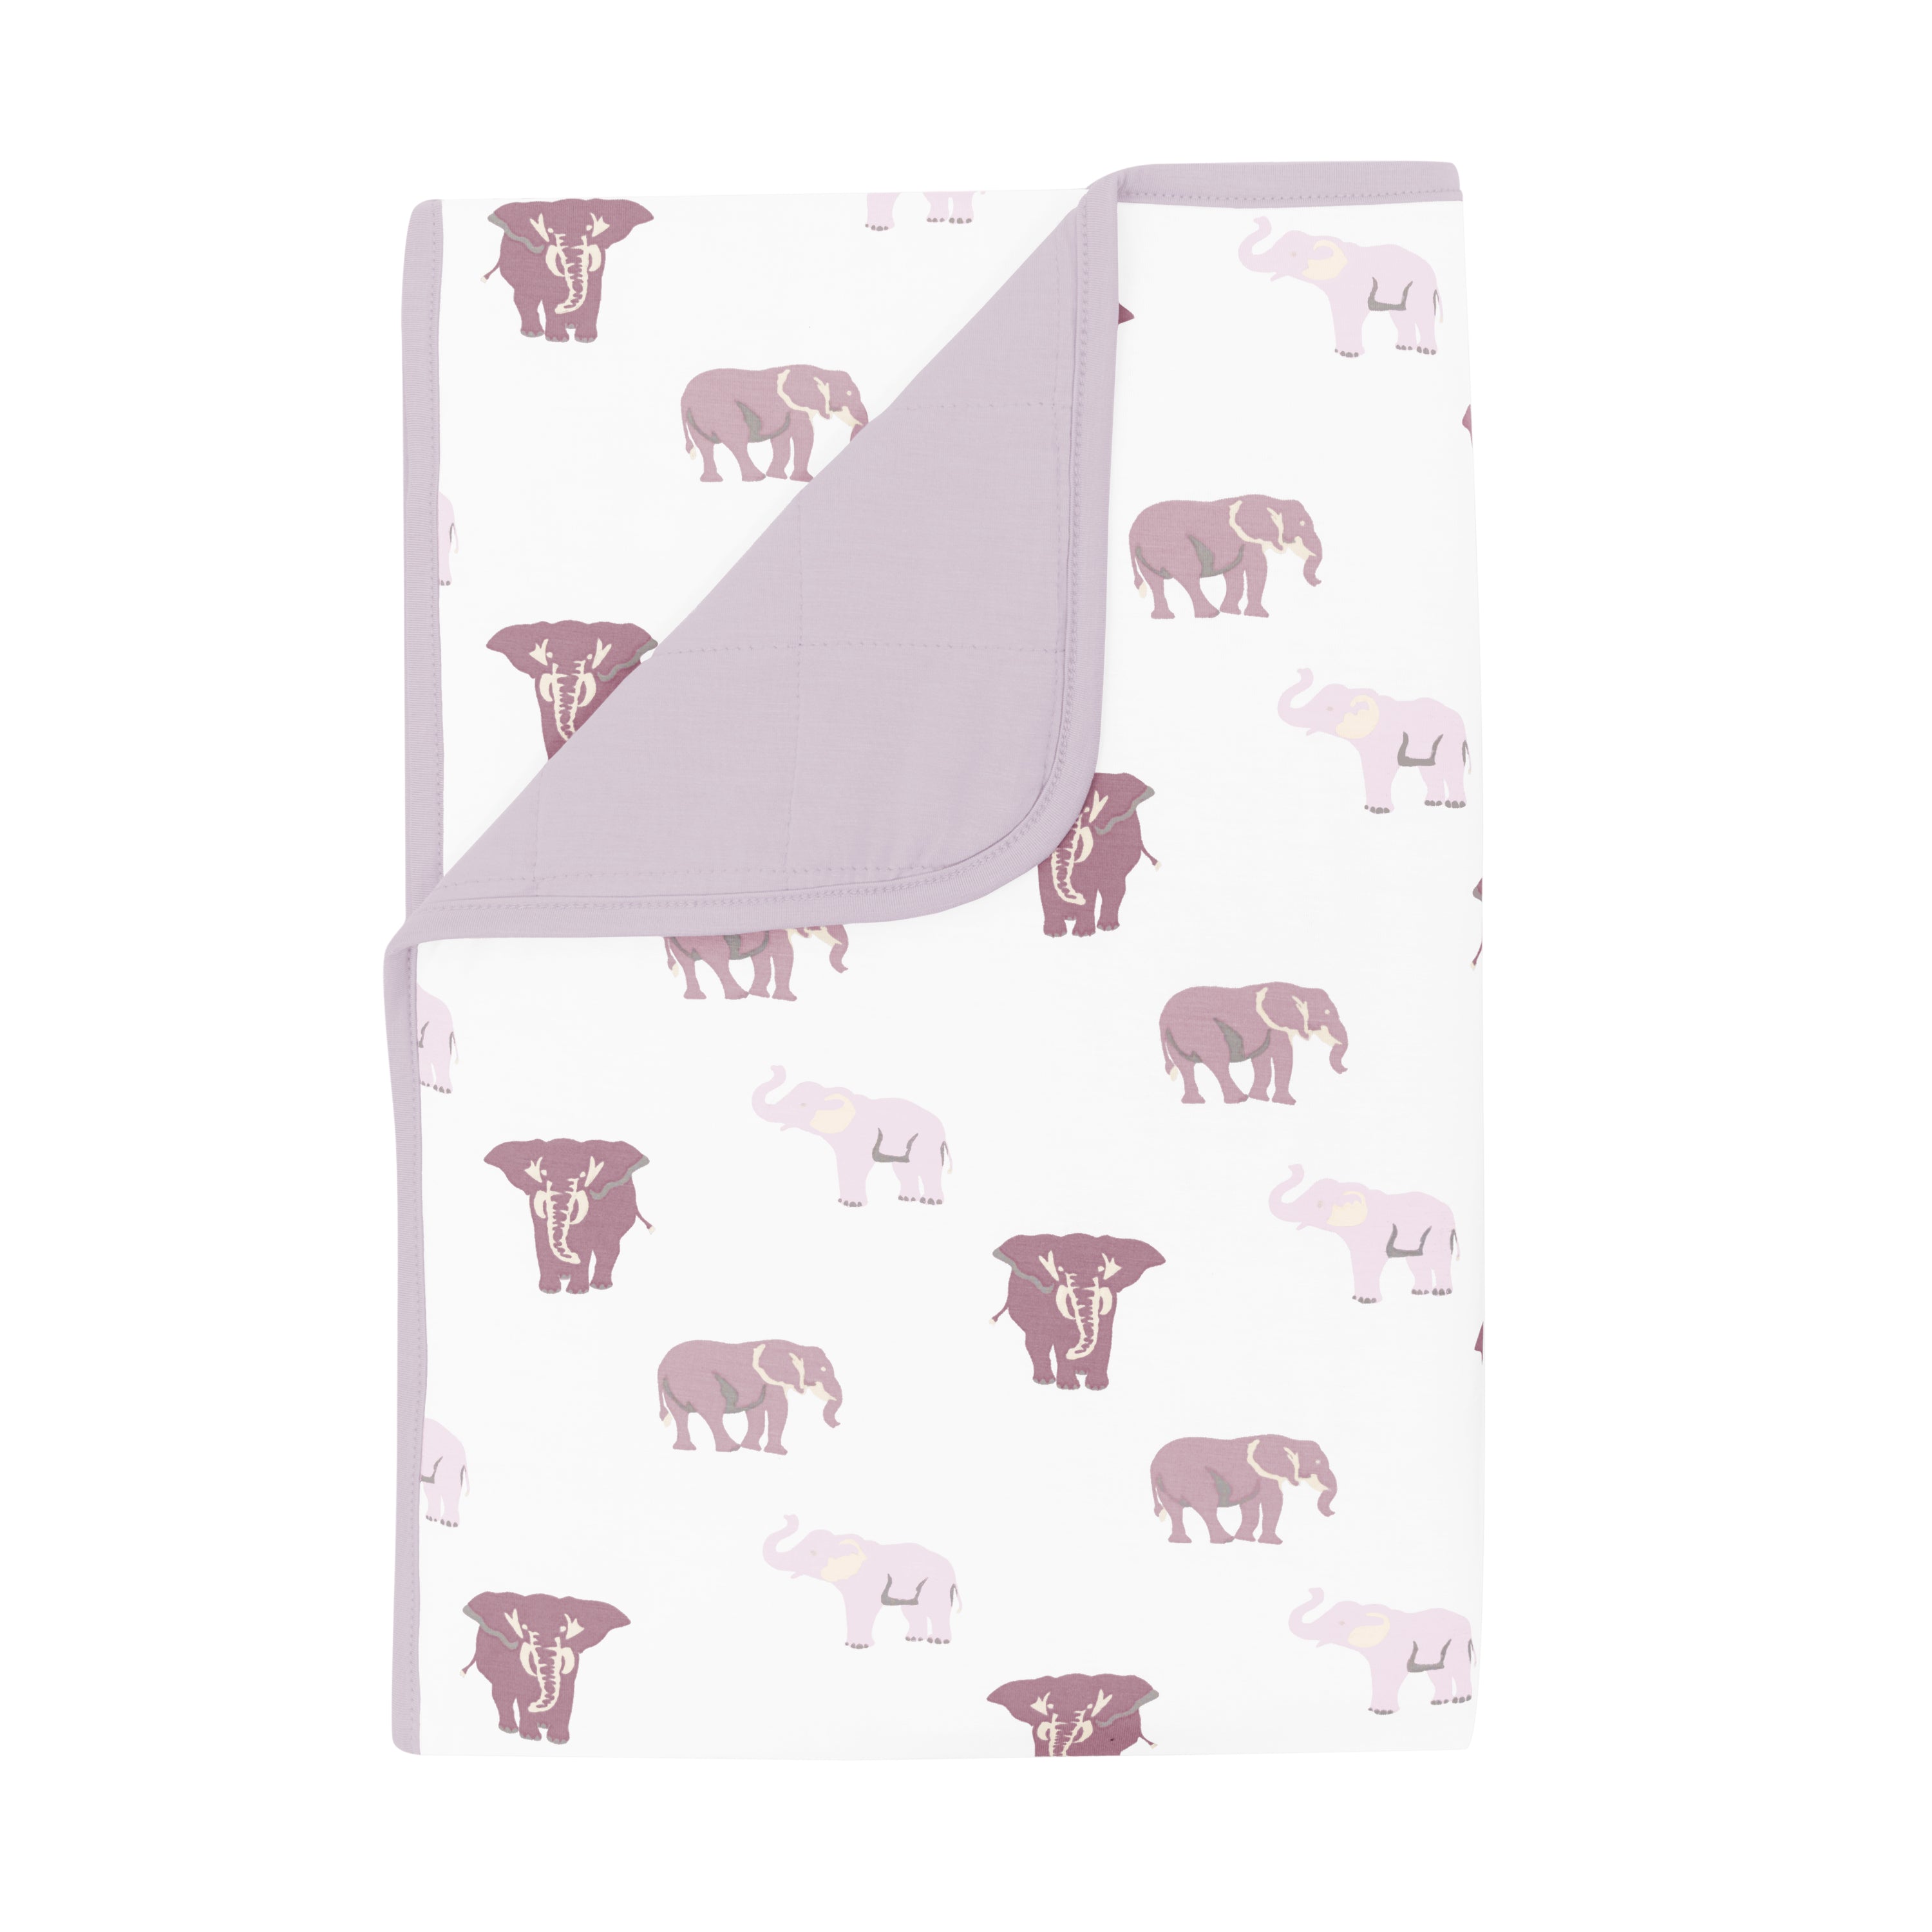 Toddler Blanket in Elephant 1.0